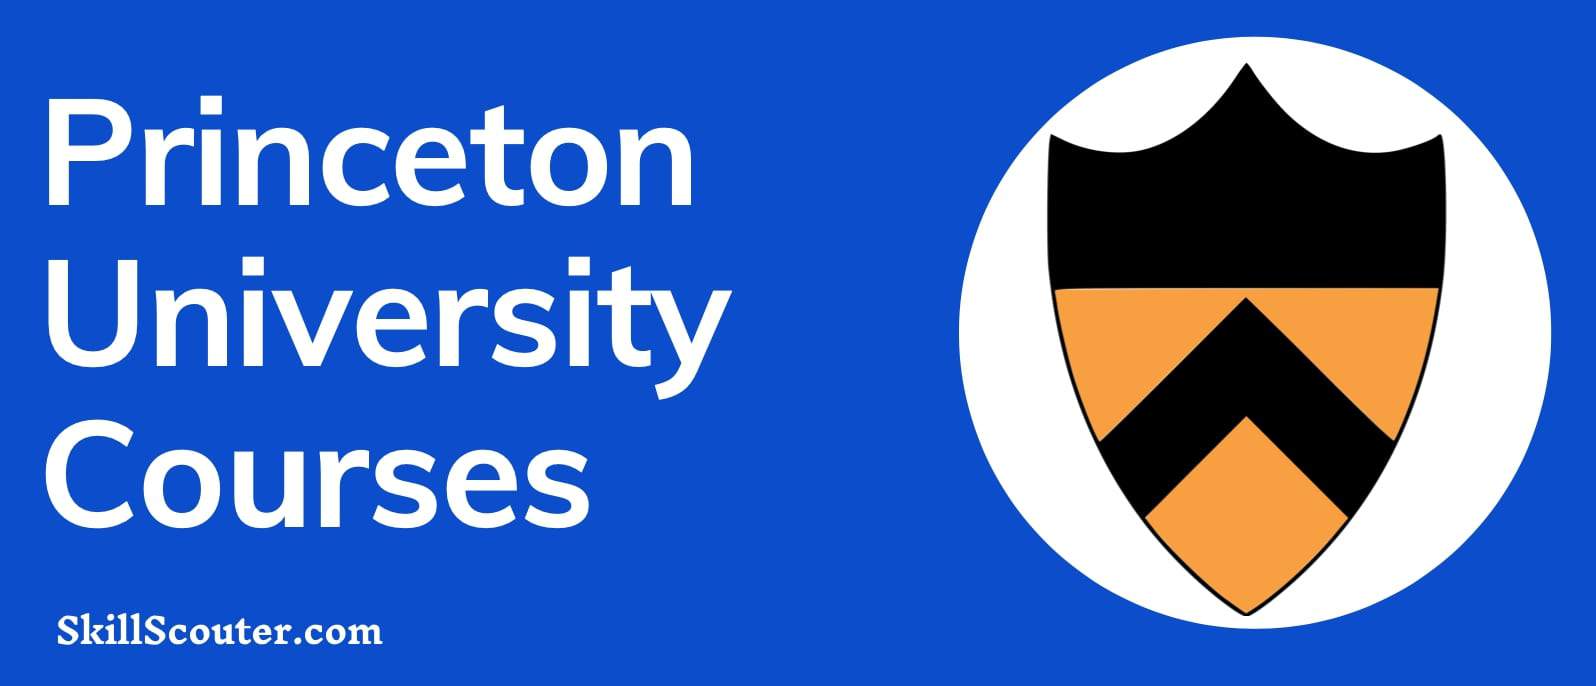 prineton university